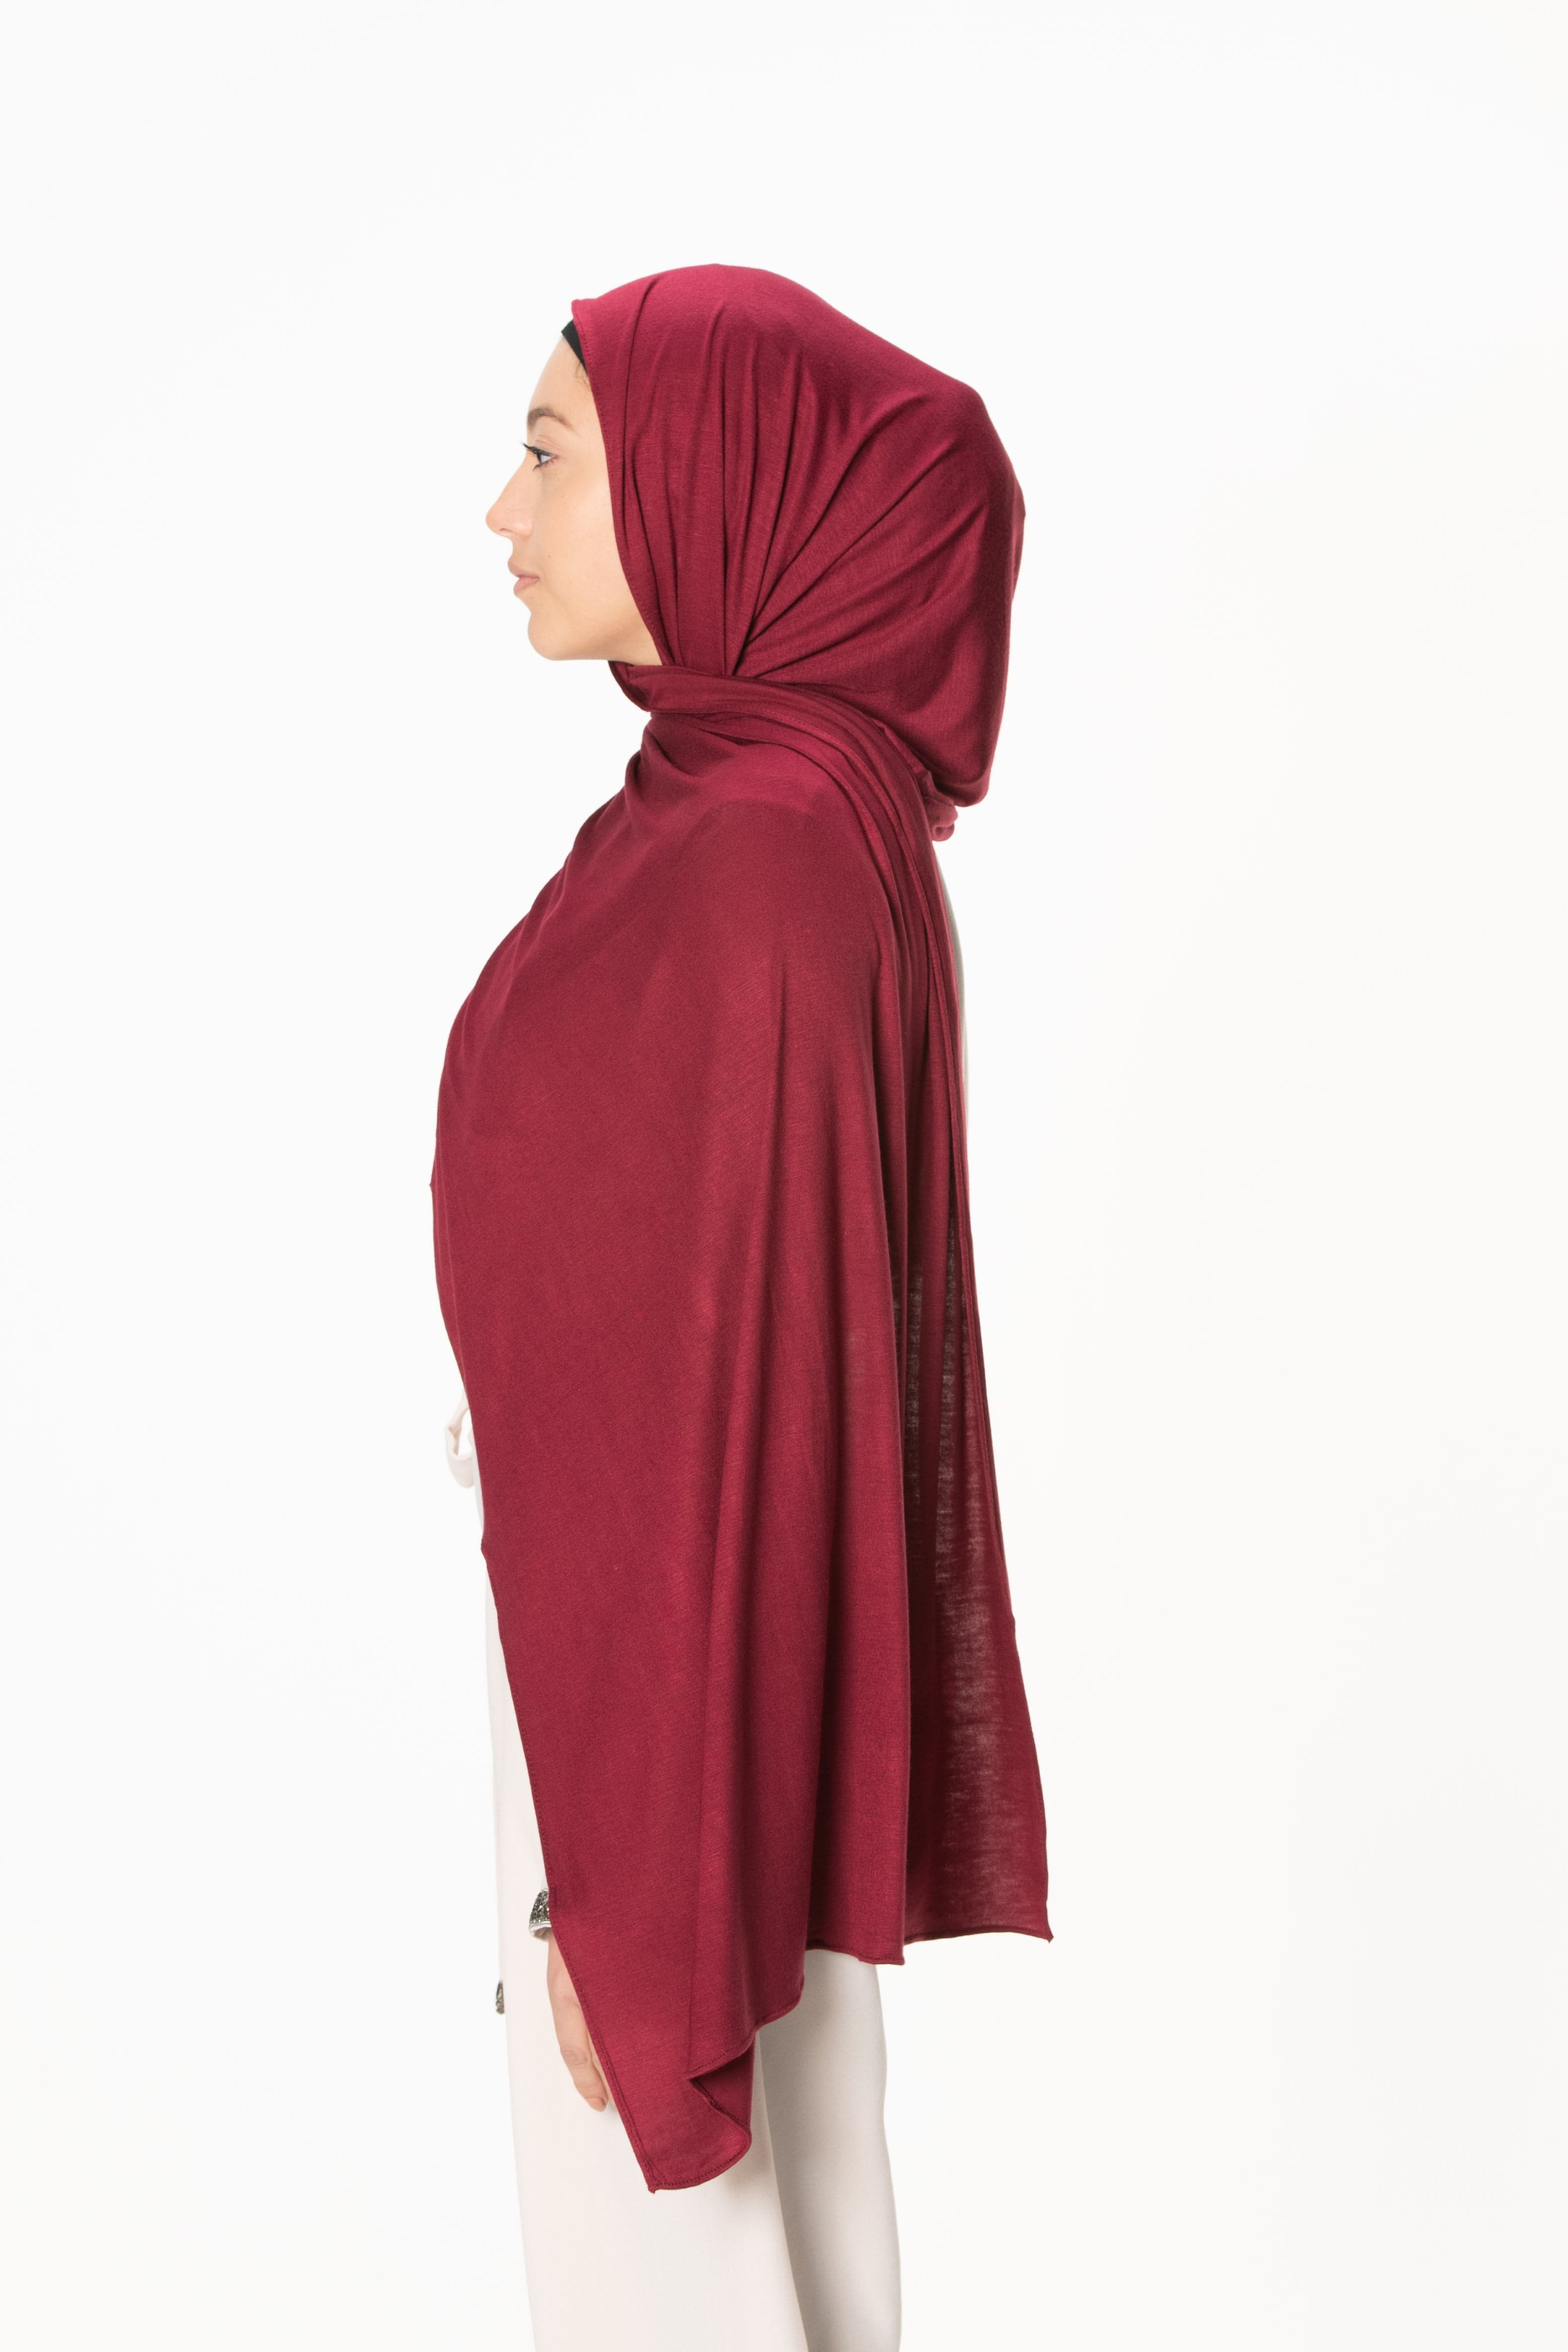 jolienisa Premium Jersey Cotton Hijab Cranberry